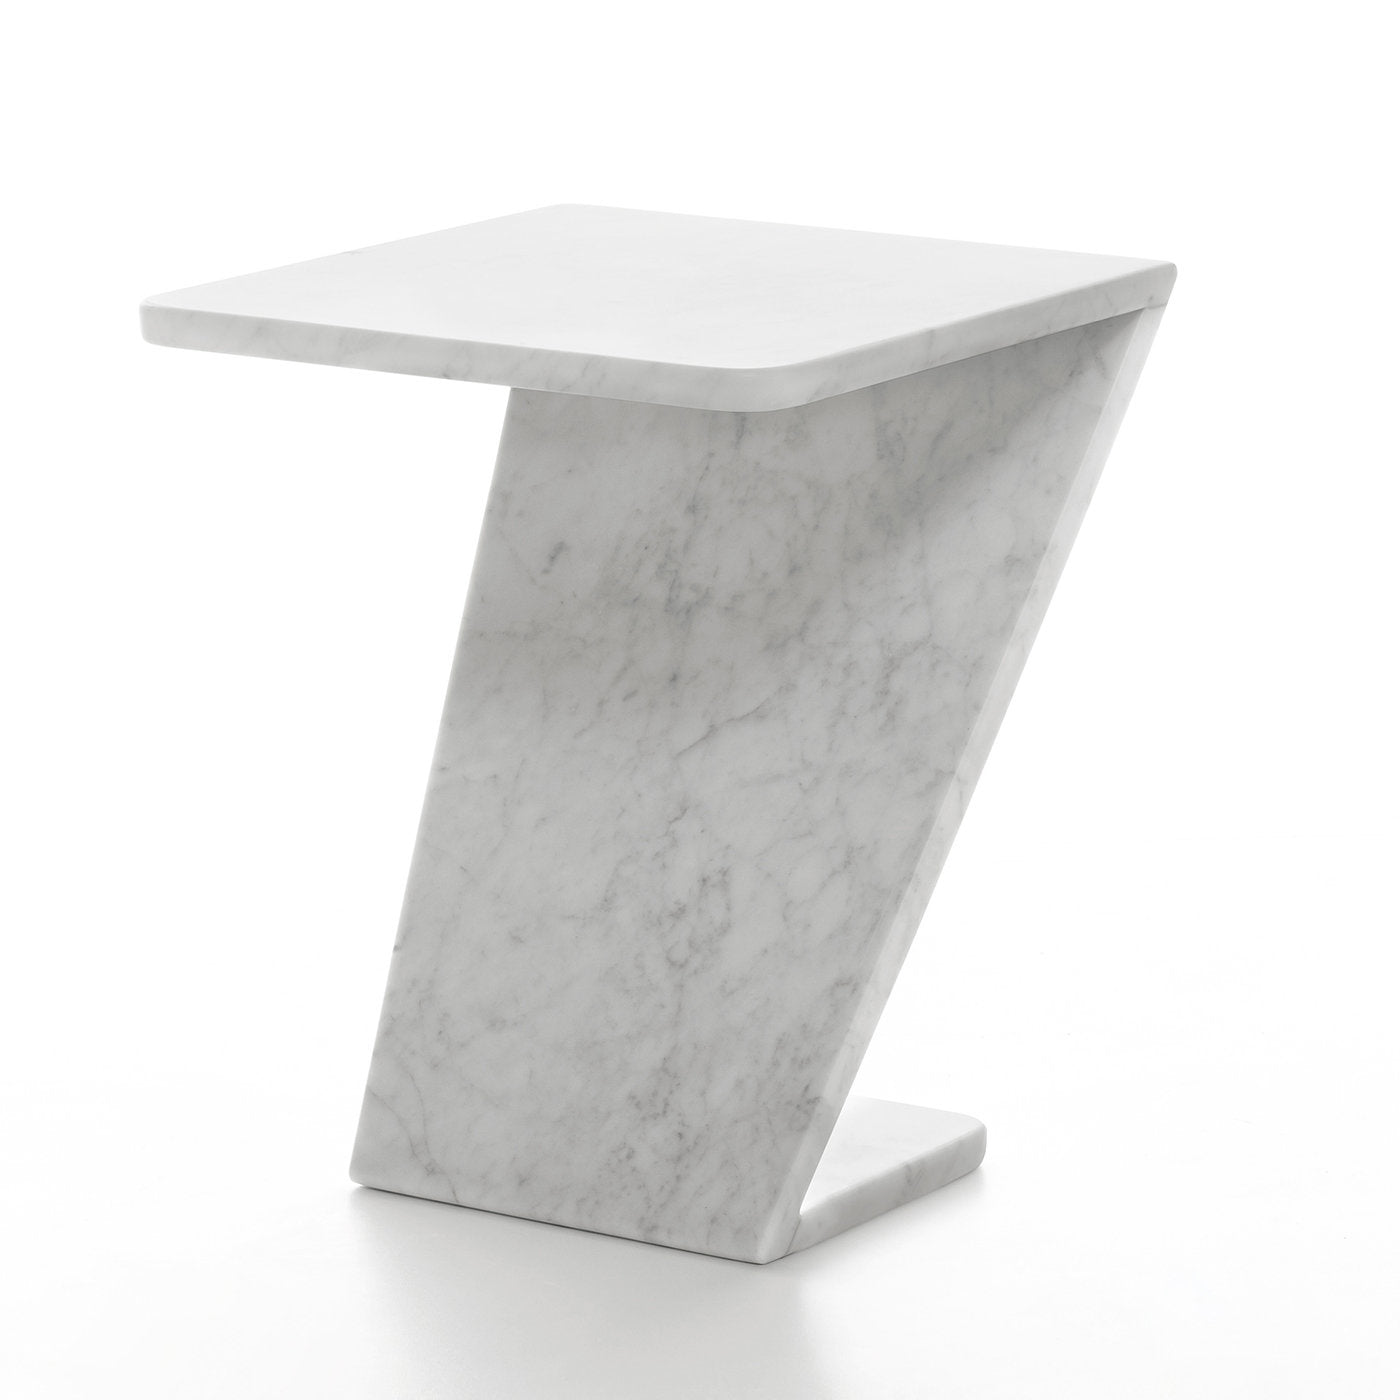 TILTINO SIDE TABLE - Design Thomas Sandell 2011 - Alternative view 2